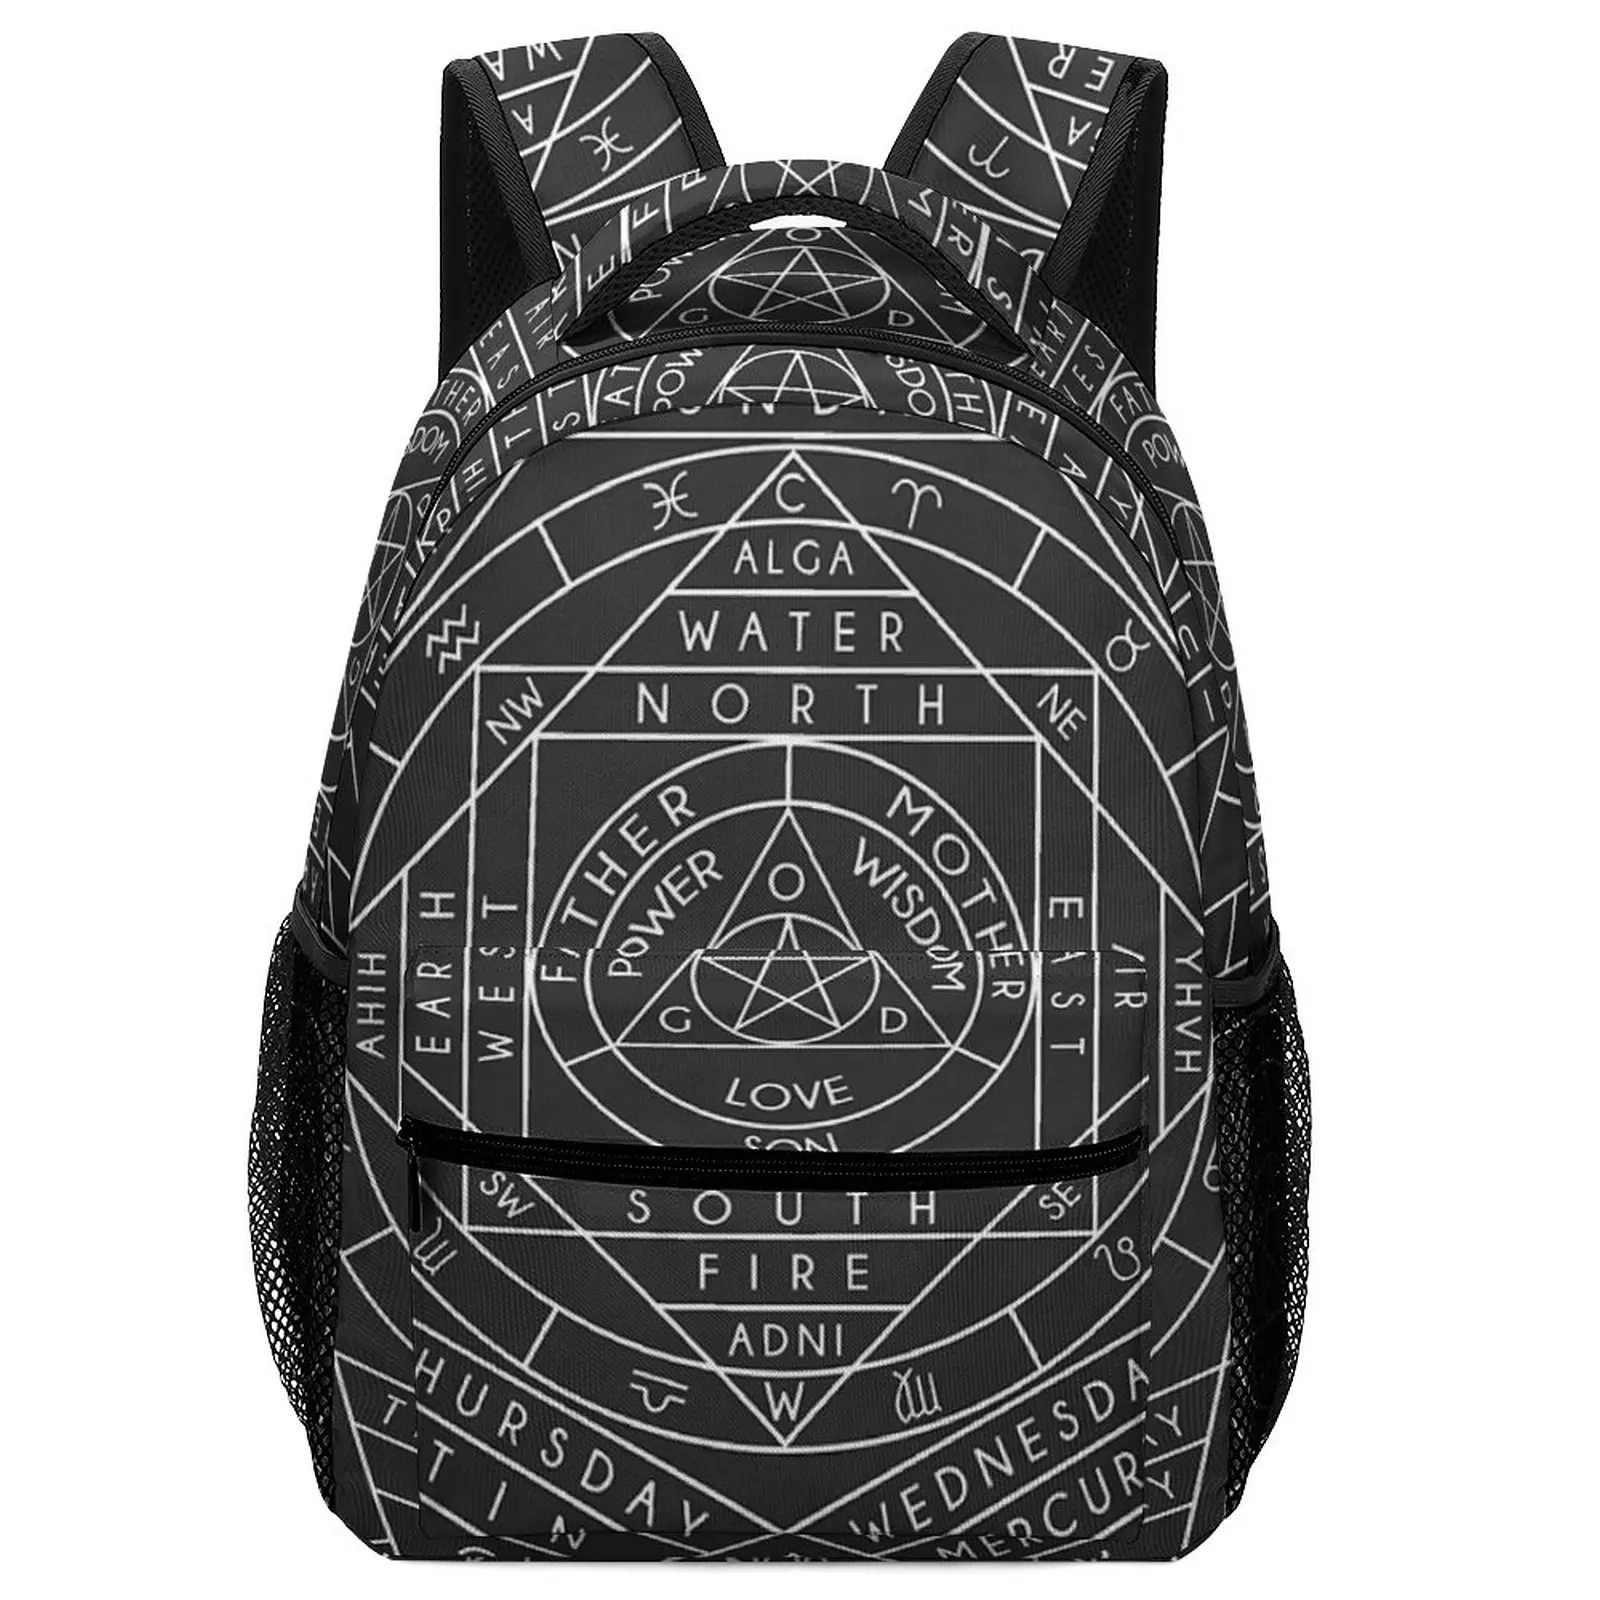 New Art Sacred Geometry Backpack For Boys for Student Kids Men School Bags Cute Bag For School